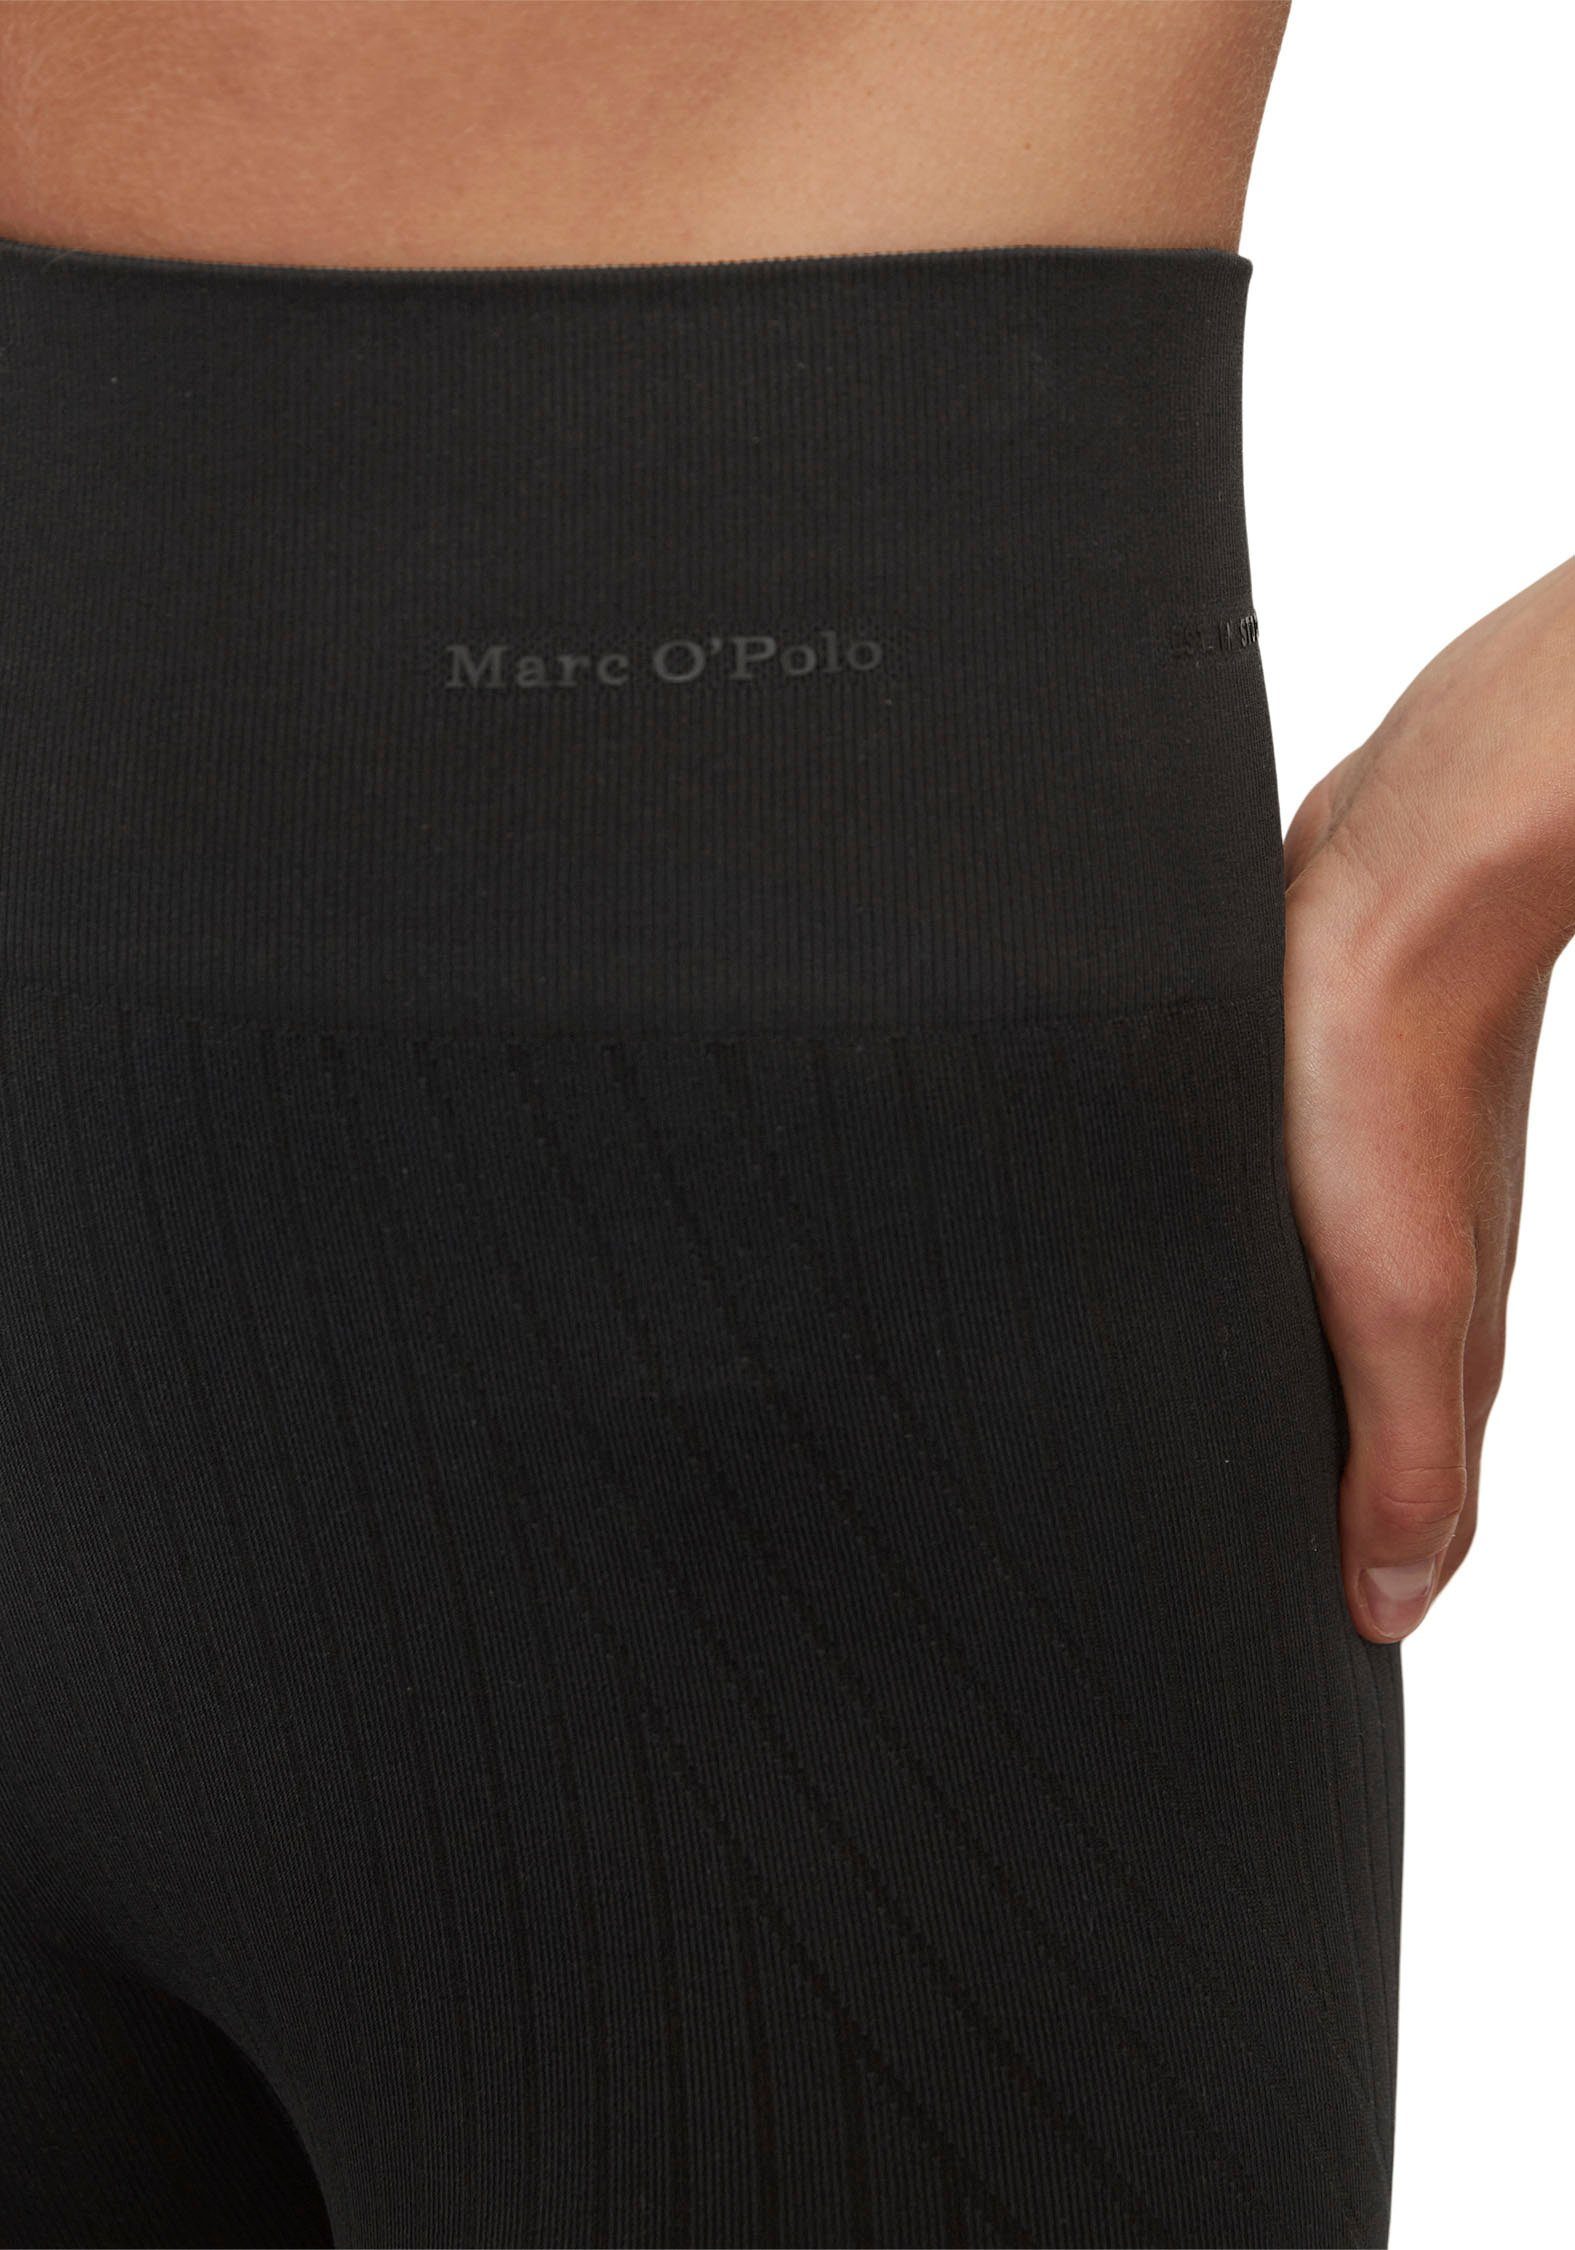 Komfortbund Marc O'Polo Radlerhose breiter extra